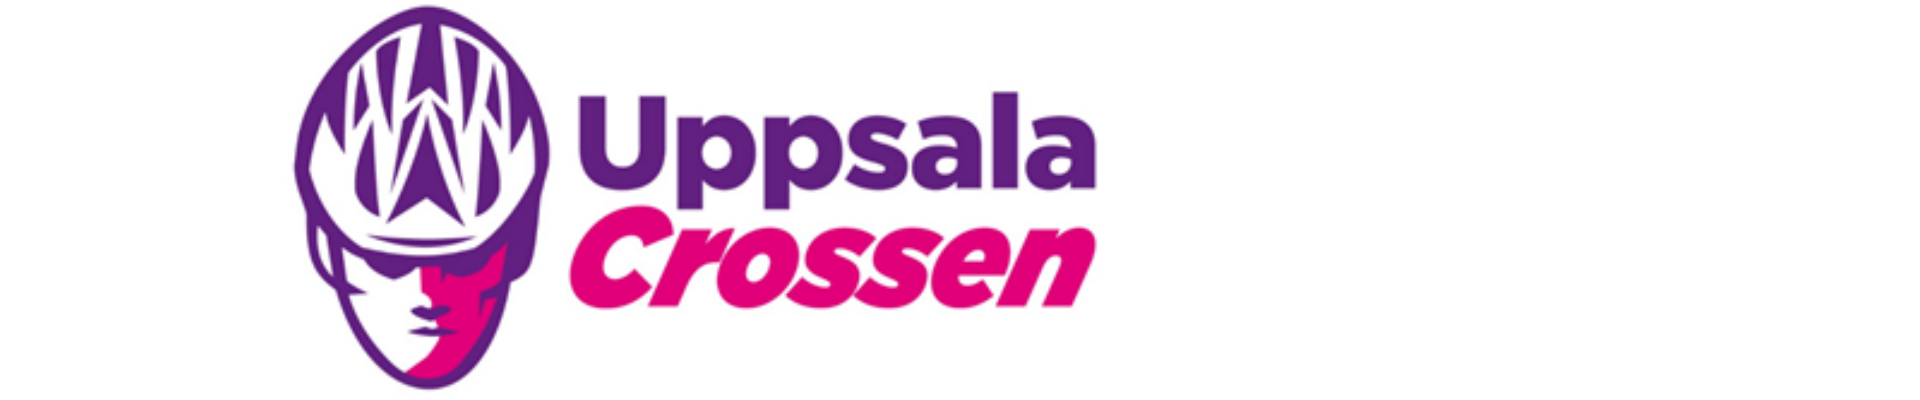 UppsalaCrossen SWE Cup